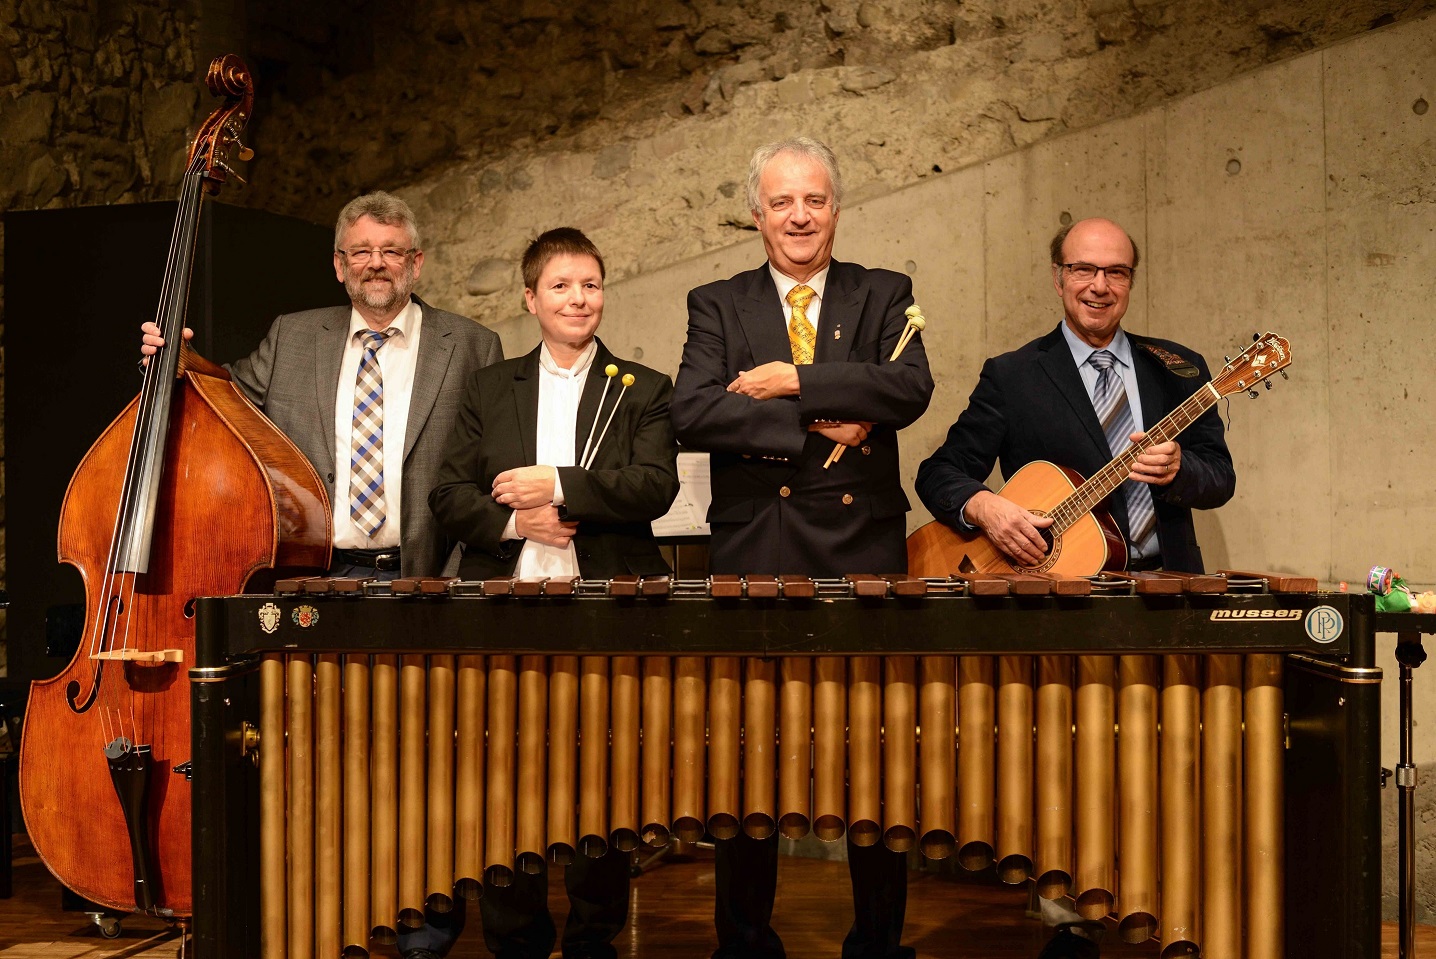 Marimba Ensemble